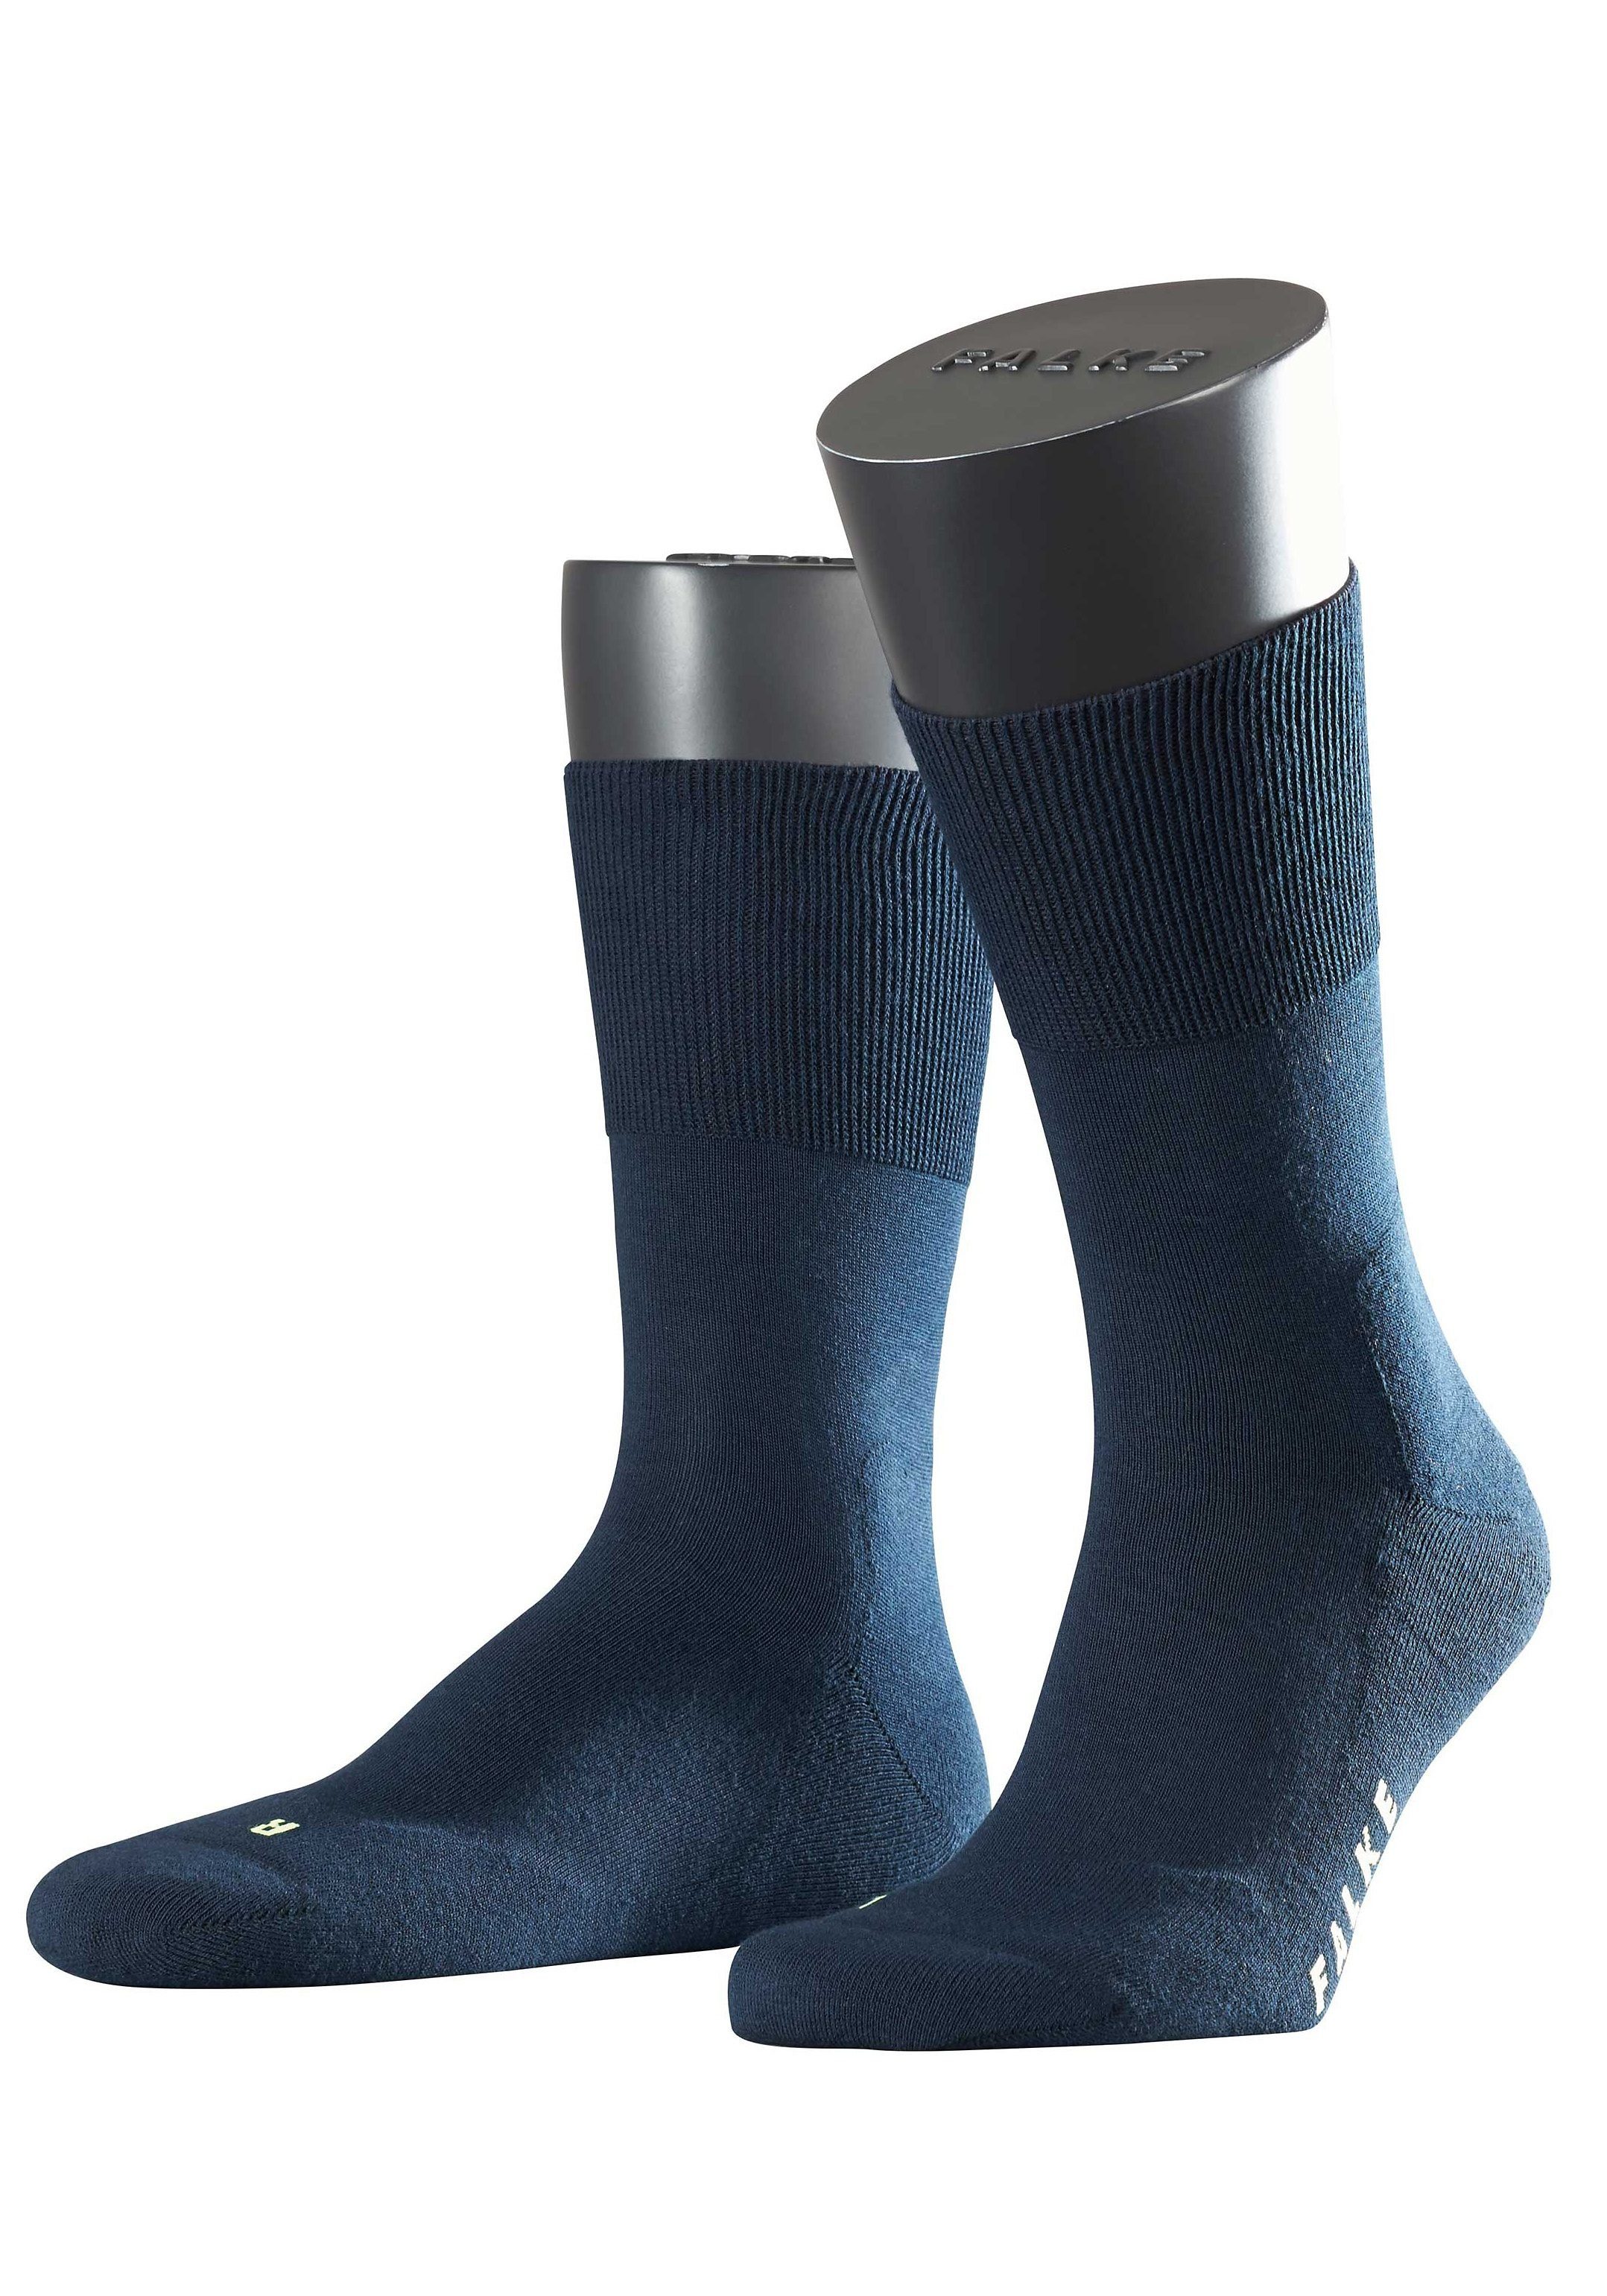 FALKE Socken Run aus wärmender Baumwolle marine